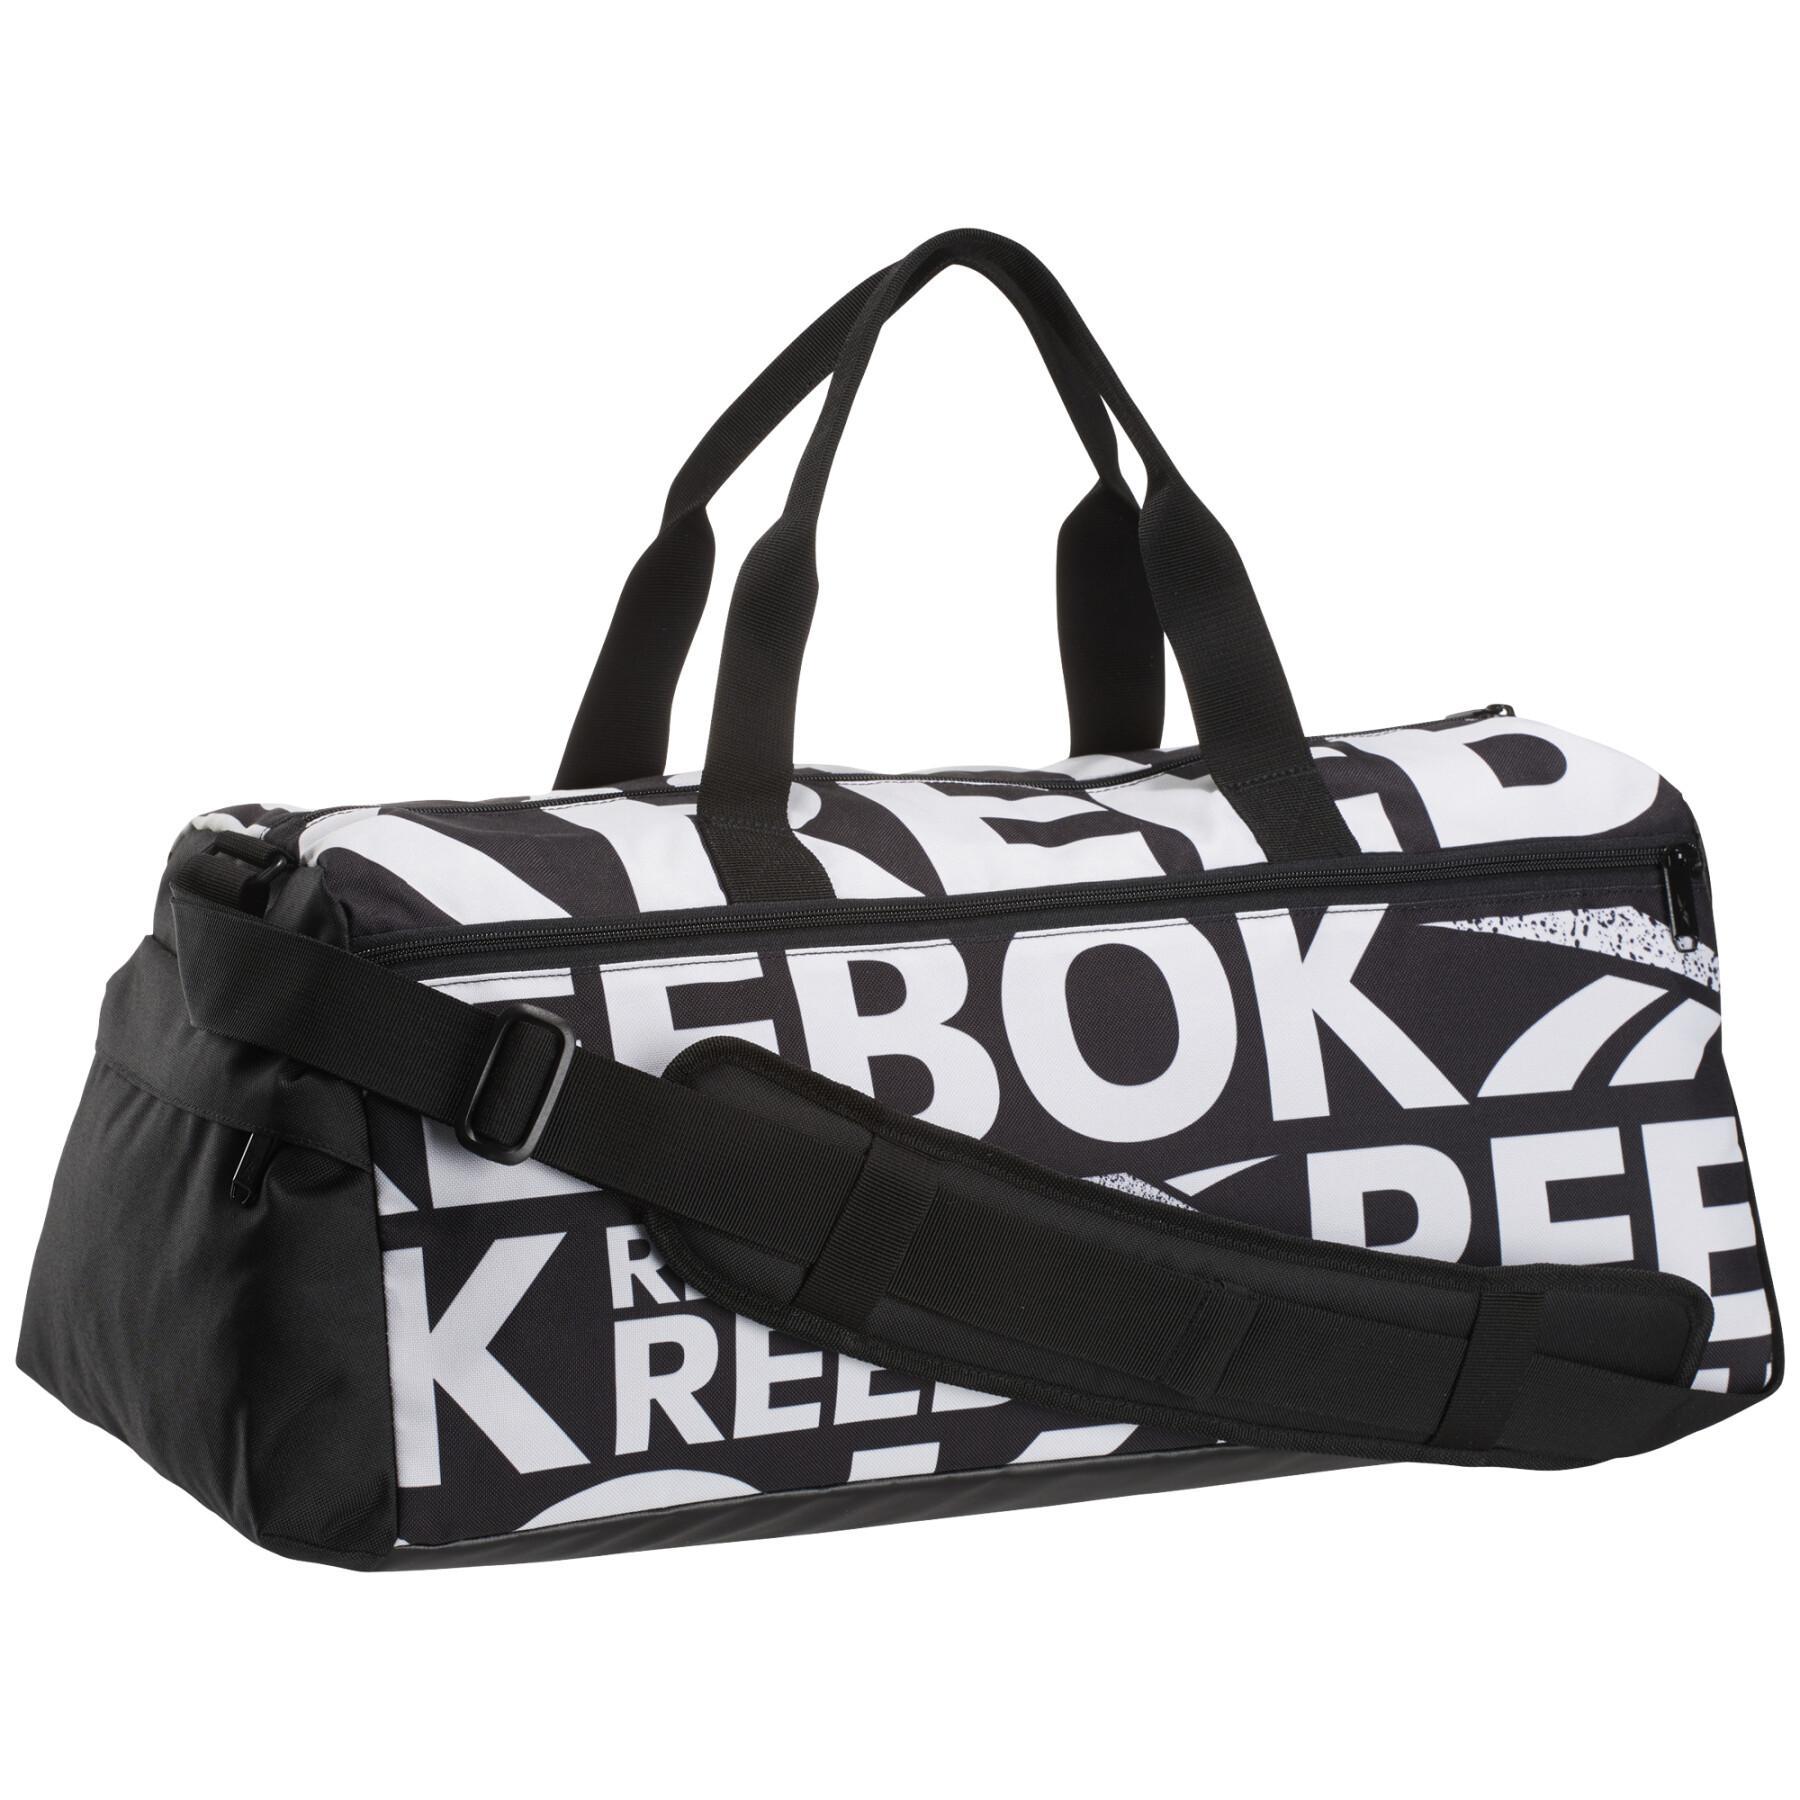 Sports bag Reebok Workout Ready - Sport bags - Bags - Equipment